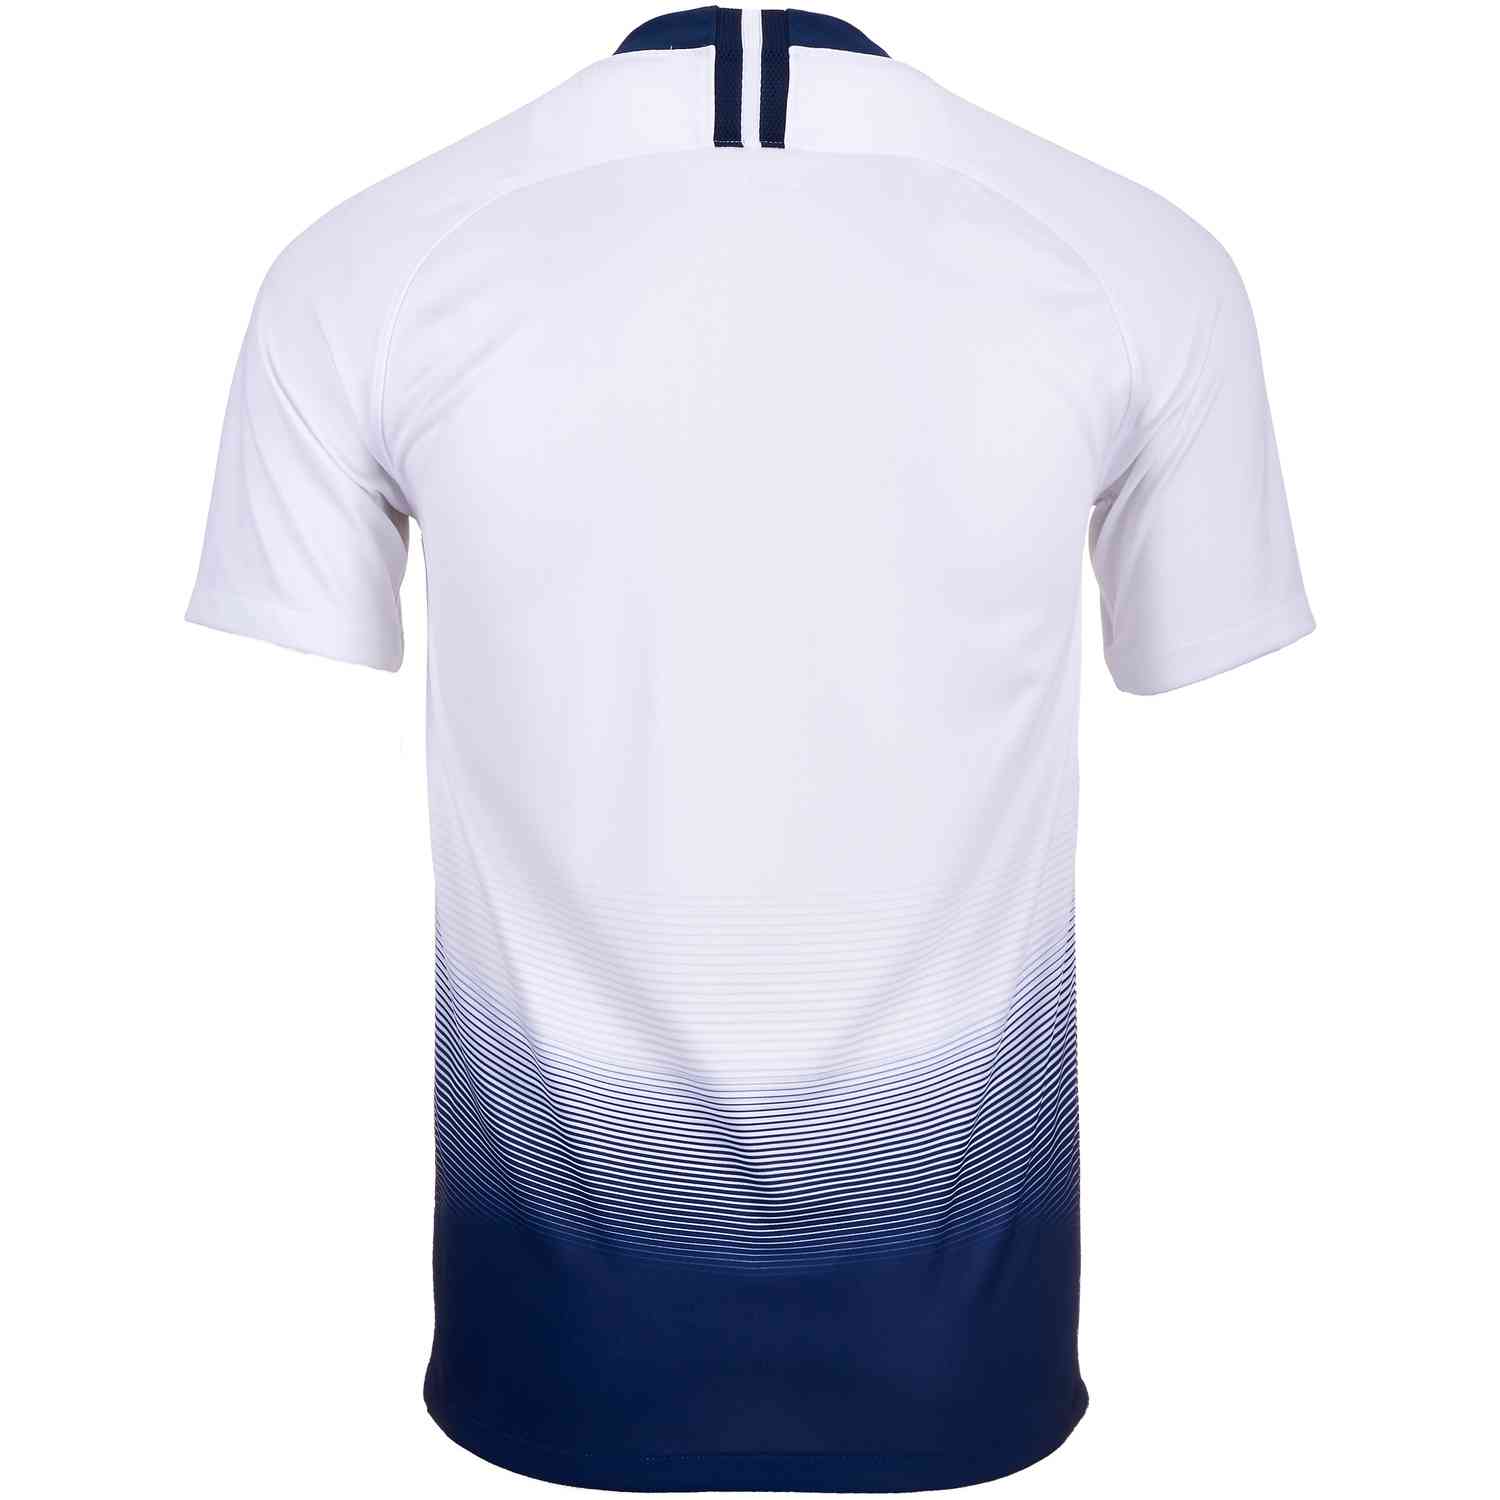 Tottenham Hotspur Home goalkeeper shirt 2018/19 - Nike